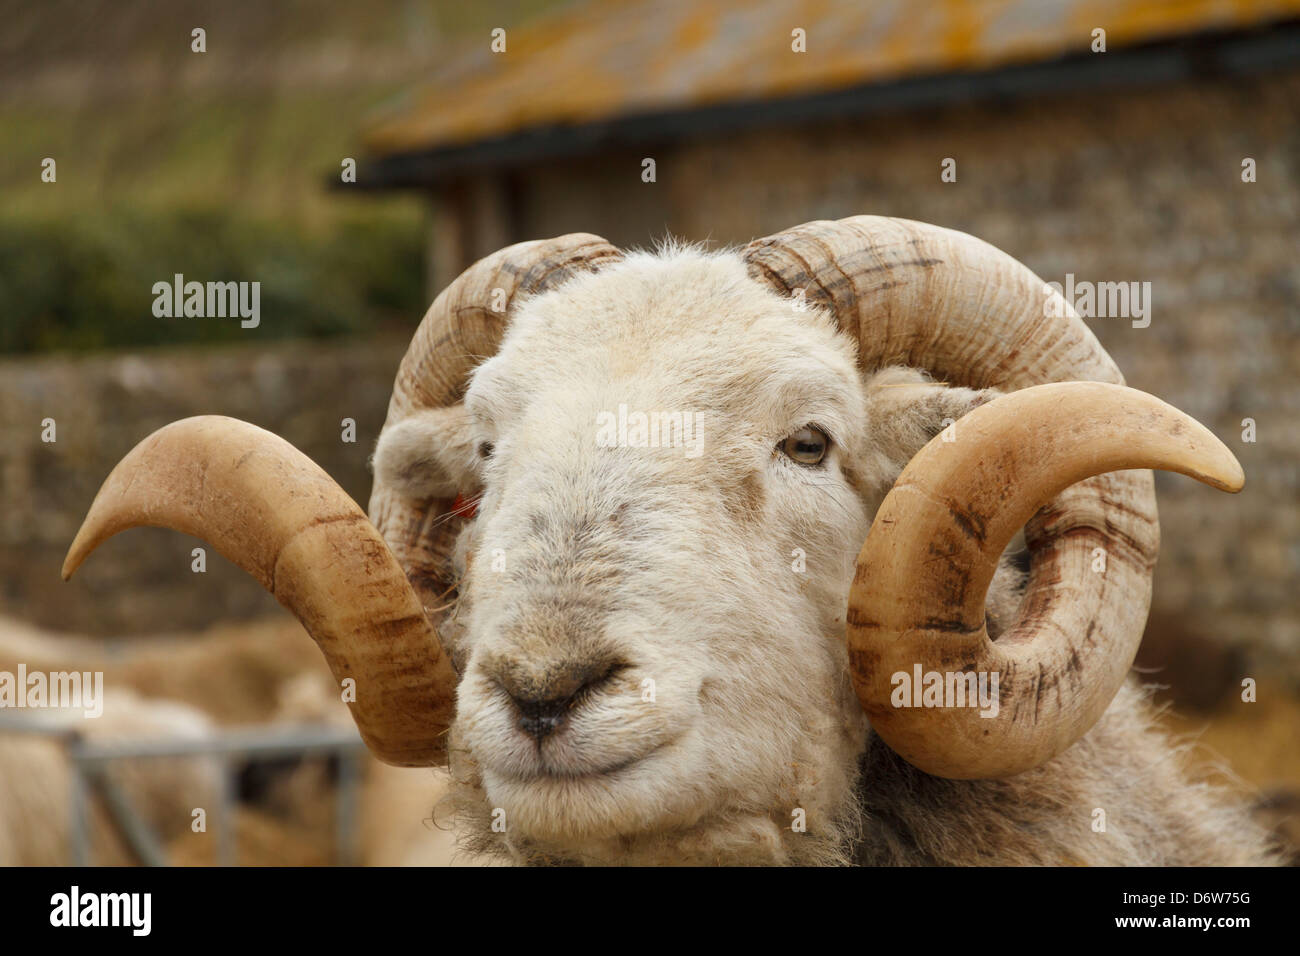 sheep hi-res stock photography - Alamy